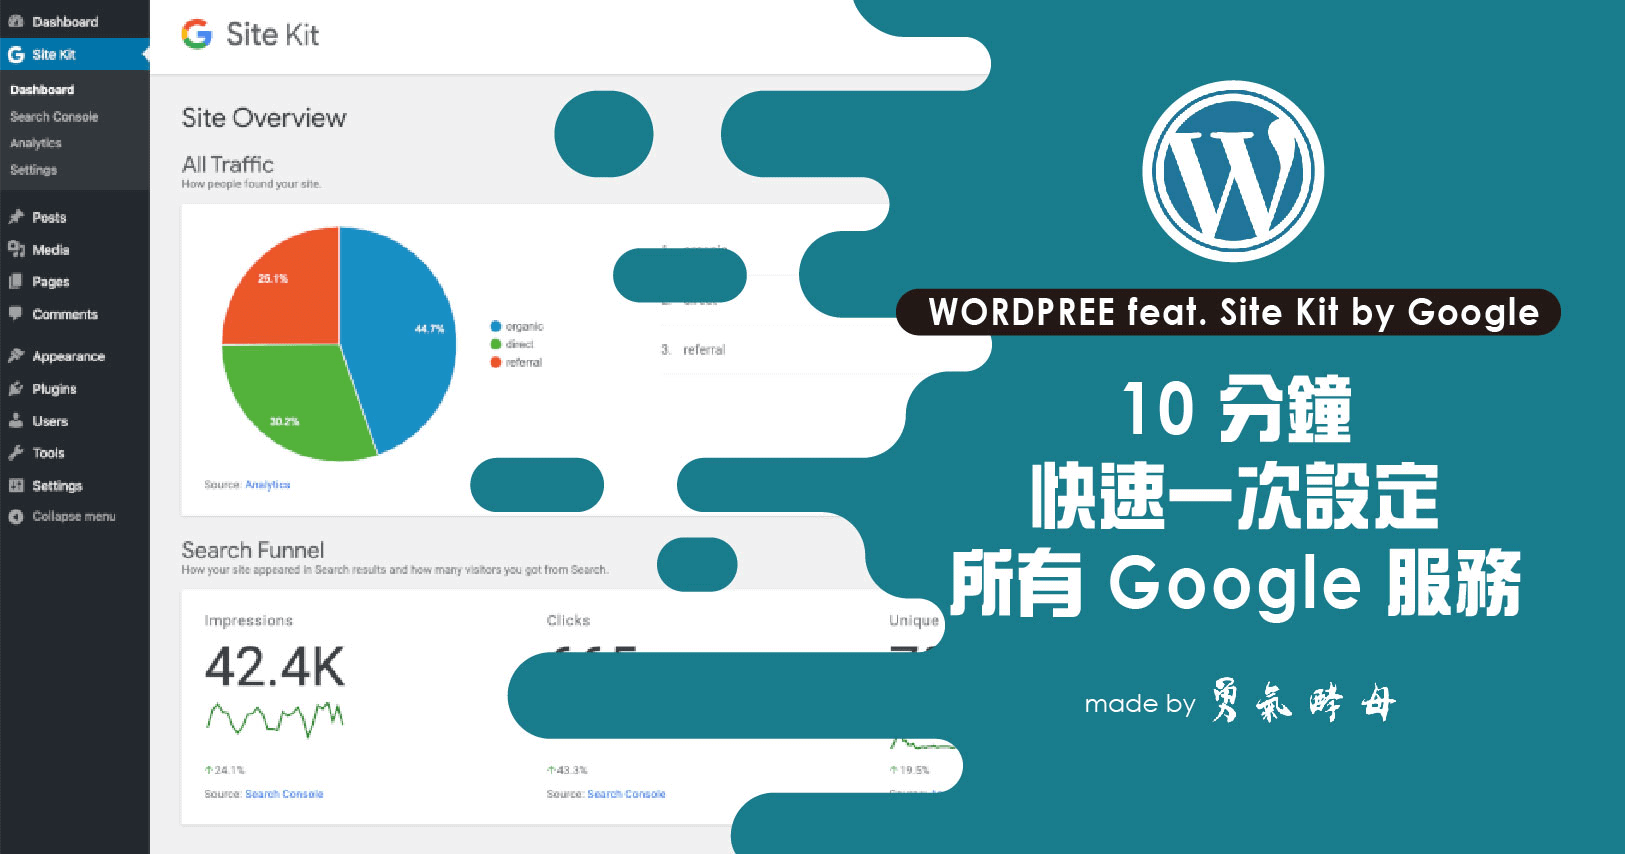 WORDPRESS｜Site Kit by Google｜官方外掛 1 次設定所有 Google 服務！